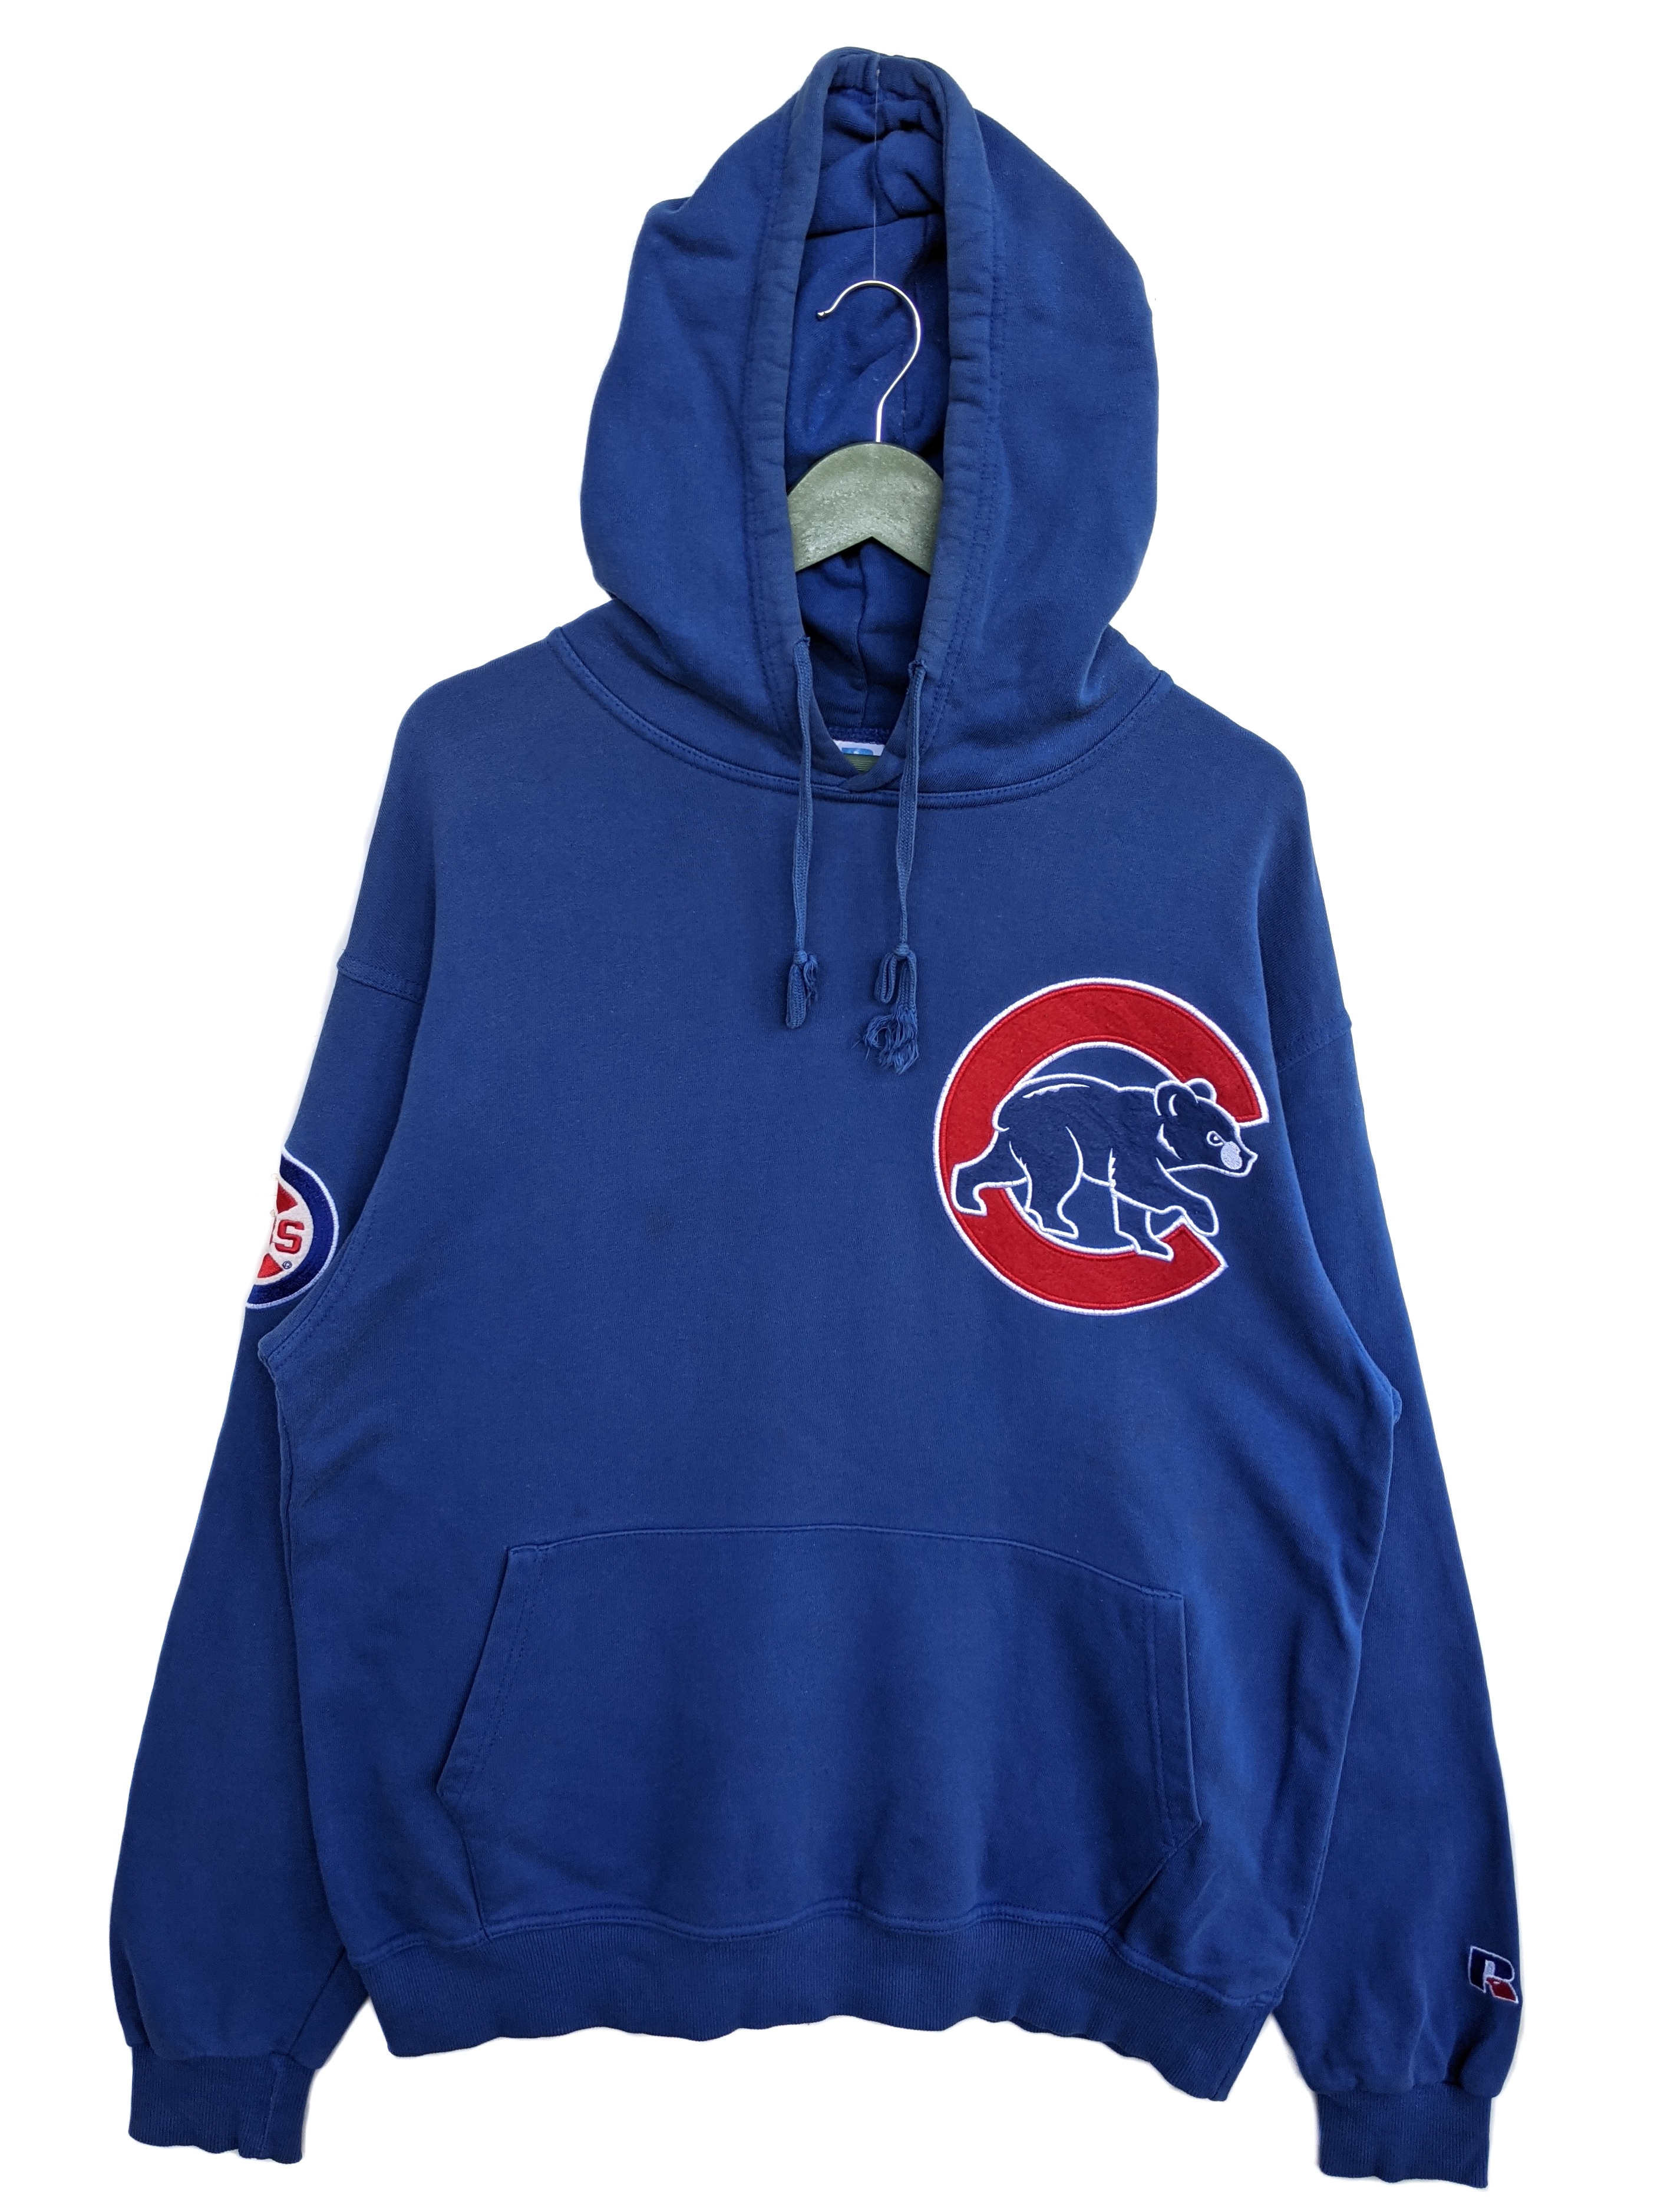 Vintage Wrigley Field Chicago Cubs Hoodie Sweatshirt Size 